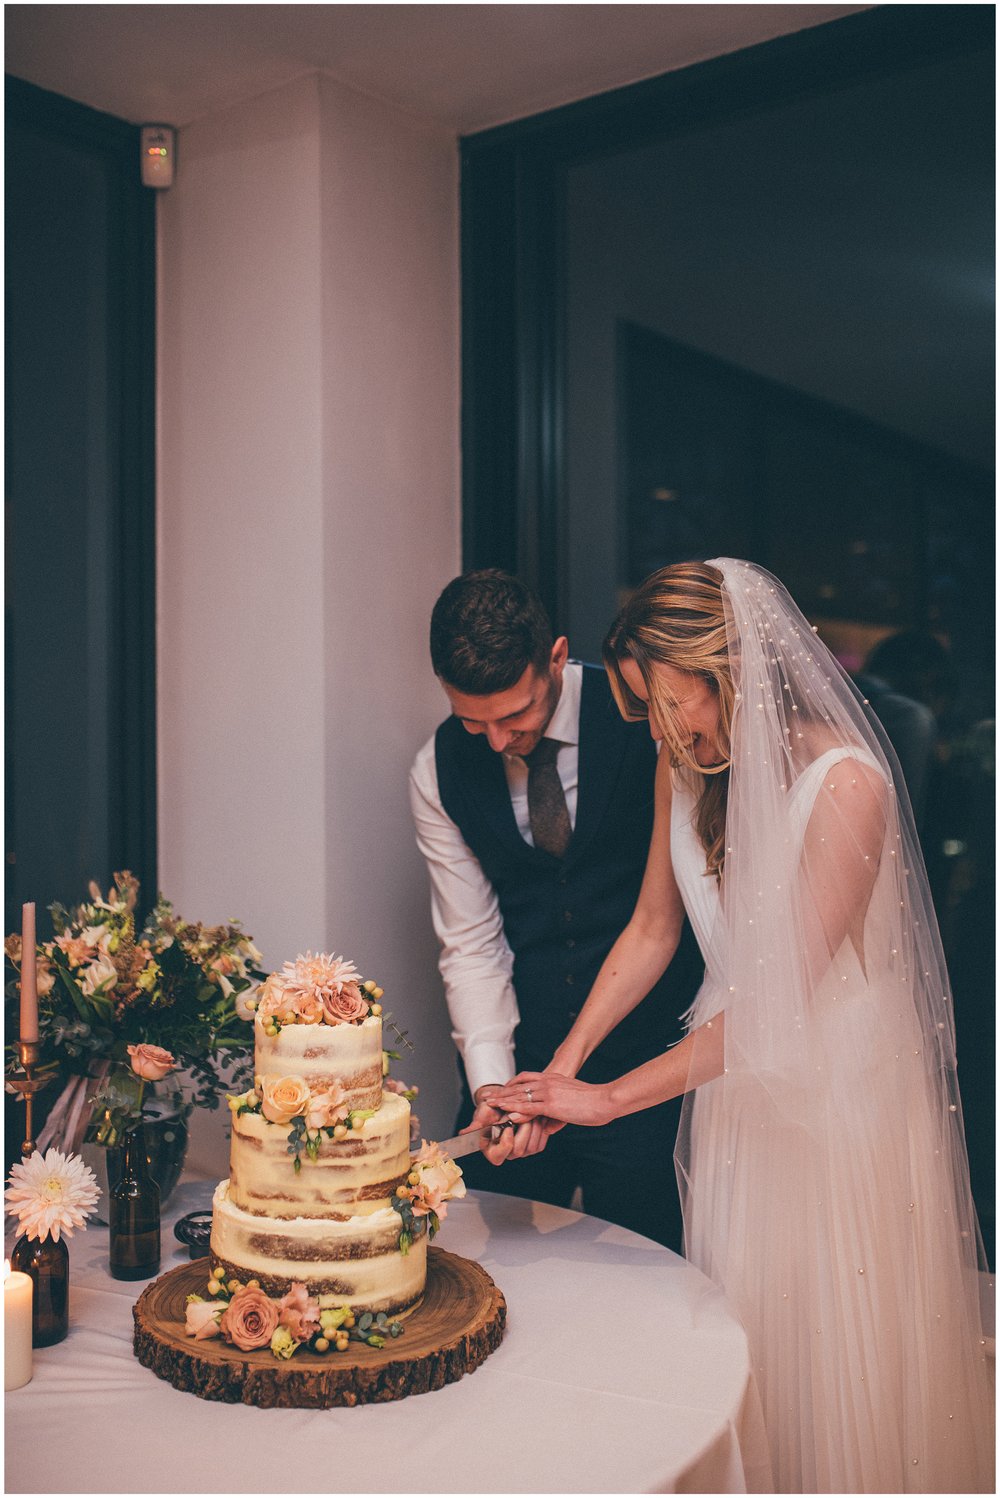 Bride and groom cut their wedding cake at Tyn Dwr Hall in North Wales